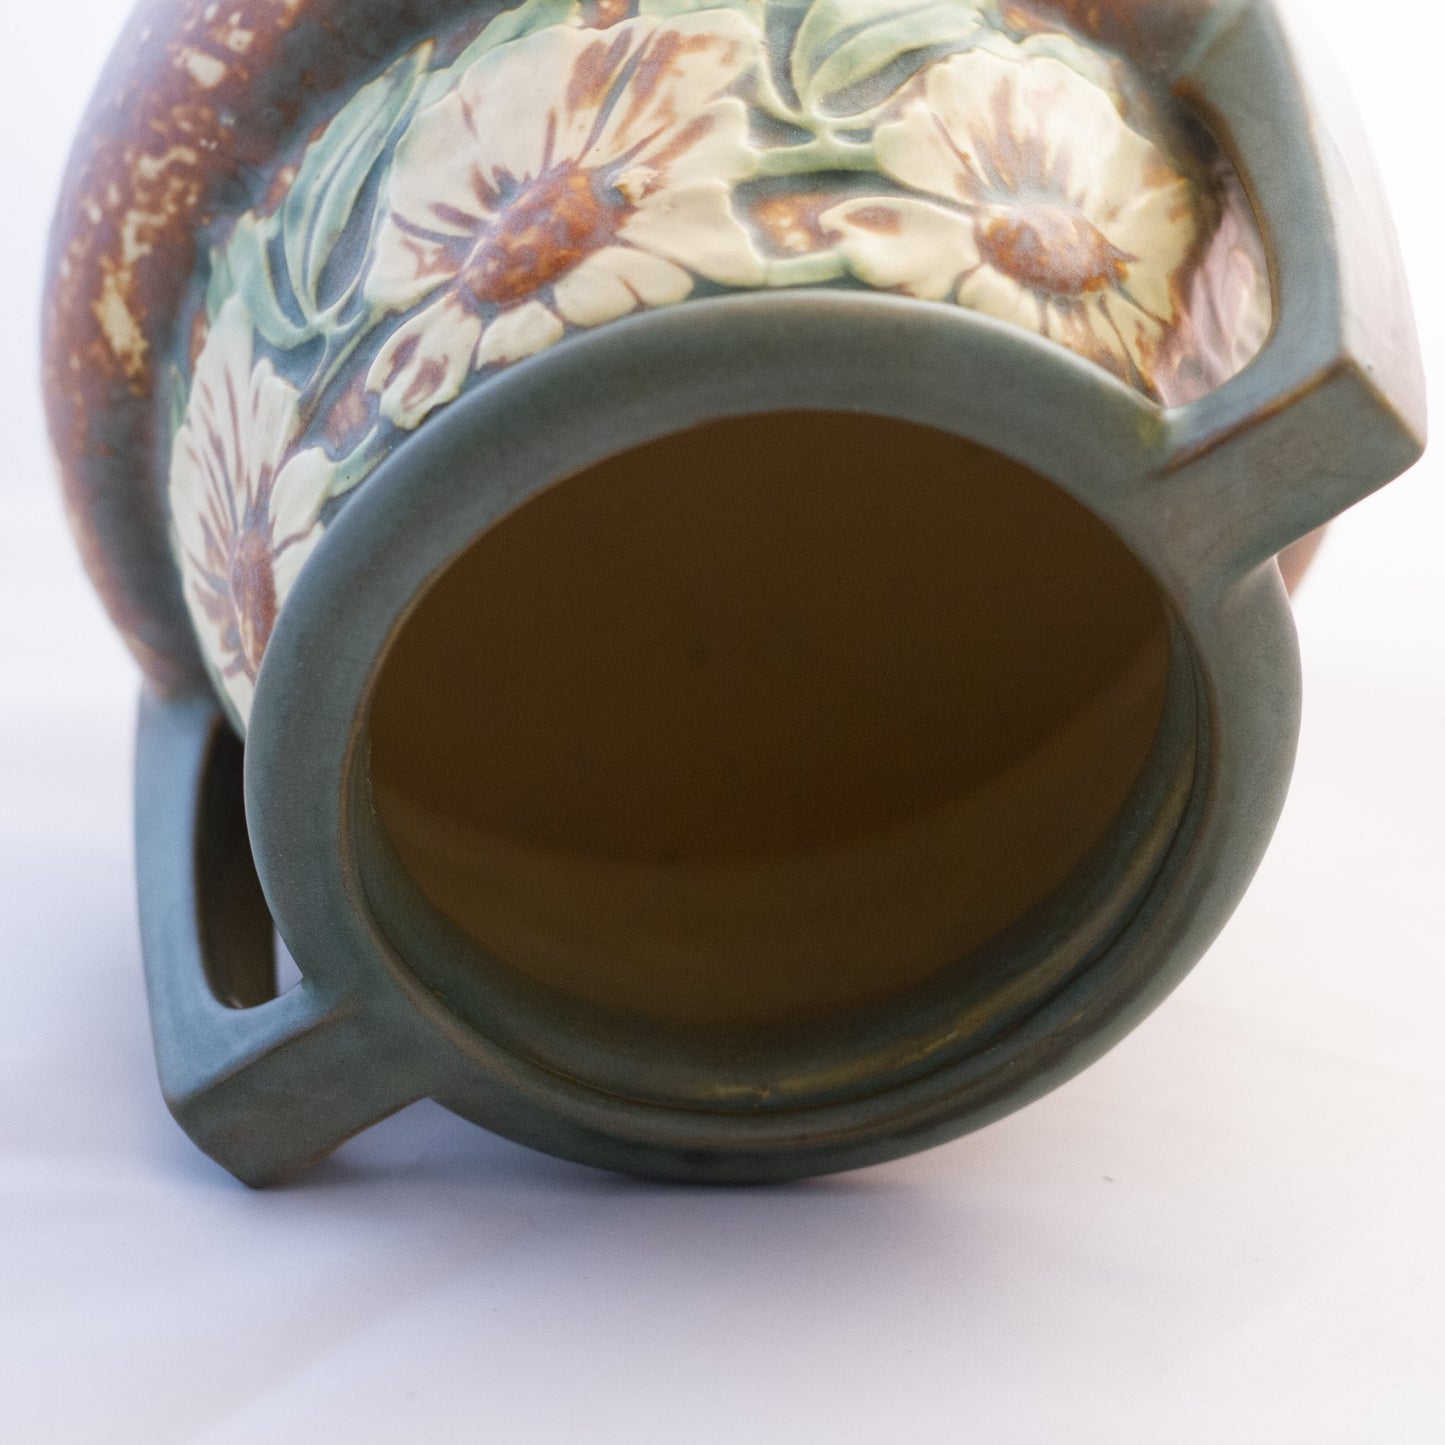 Roseville Pottery DOUBLE-HANDLE DAHLROSE 8" VASE #367-8 Circa 1920s